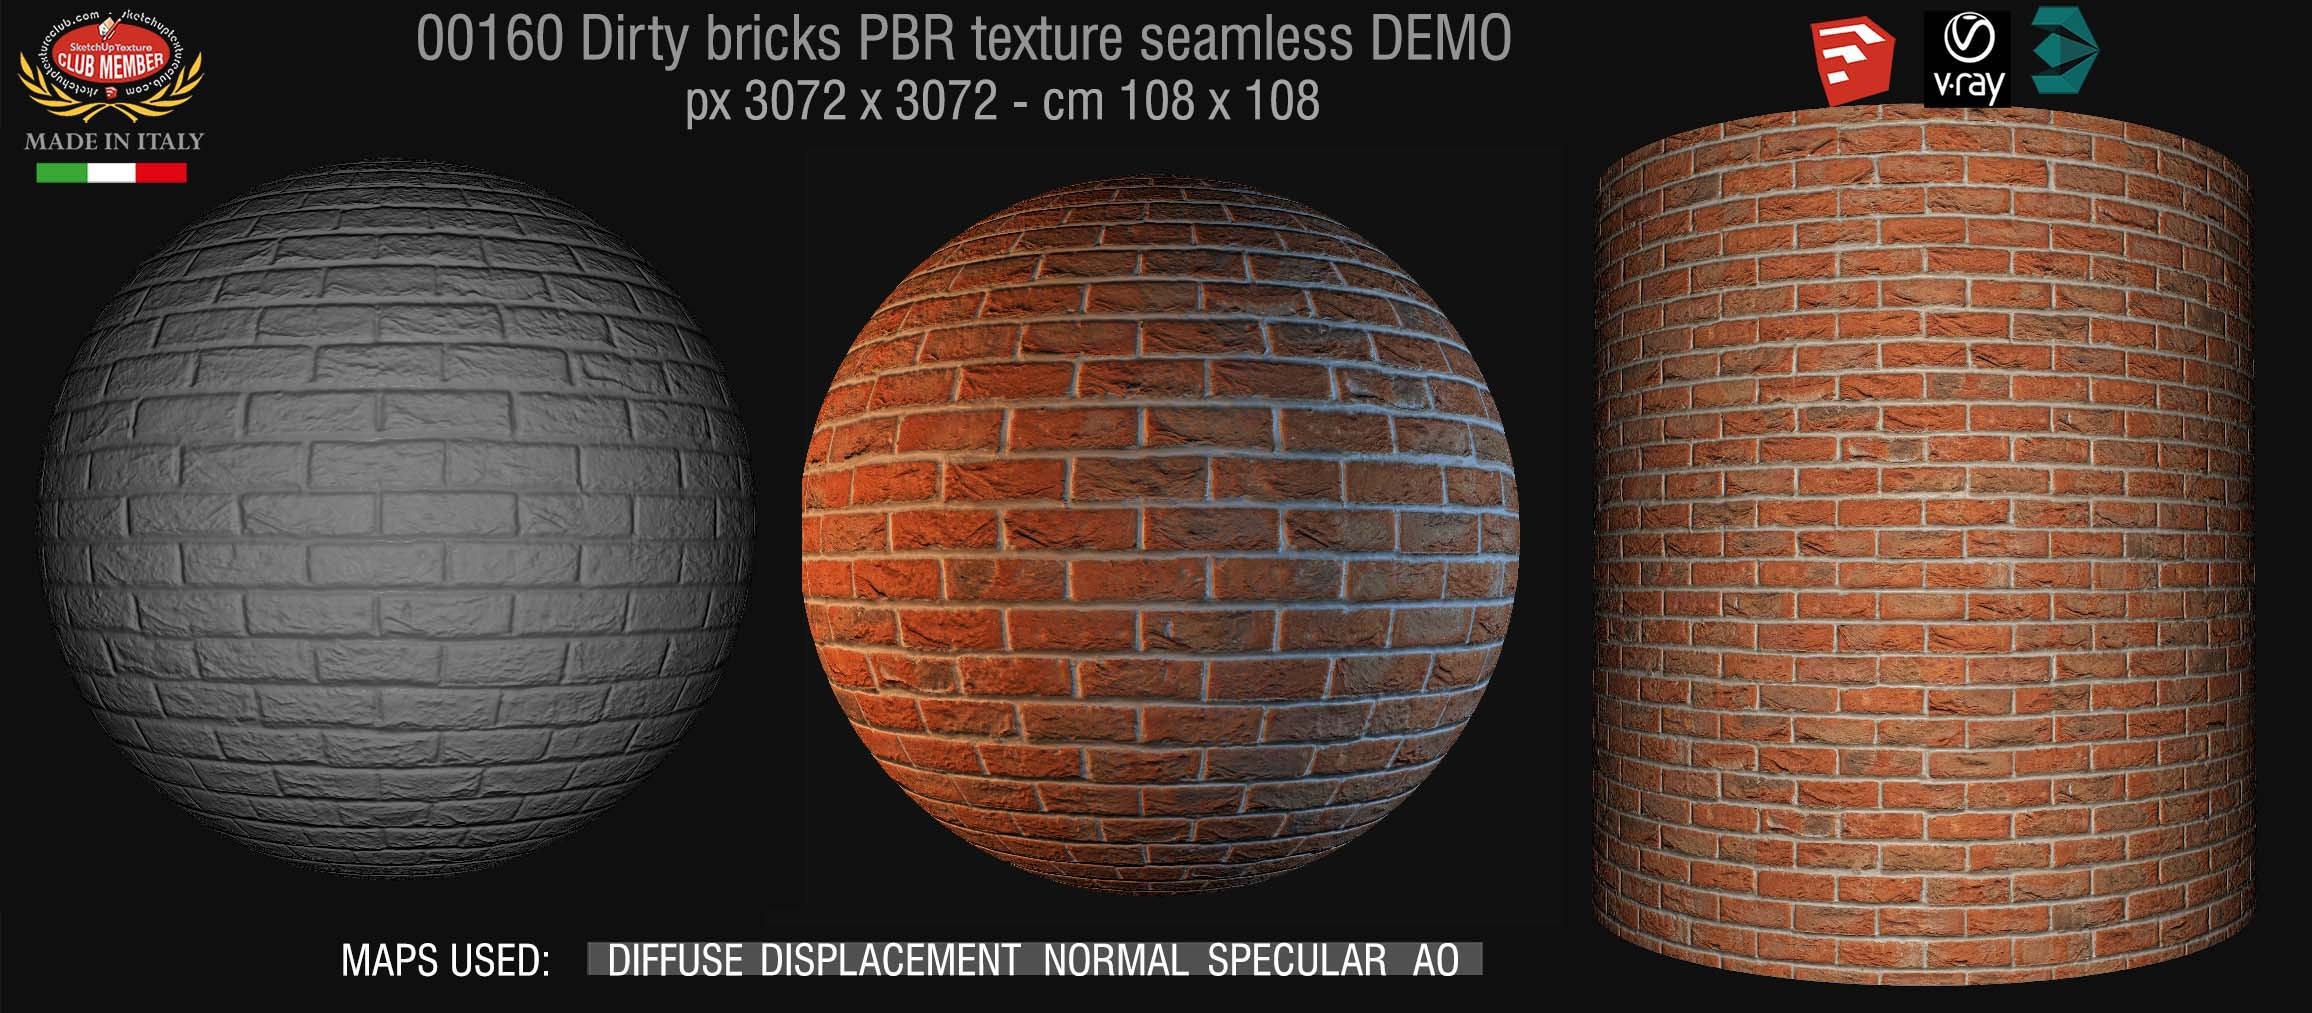 00160 Dirty bricks PBR texture seamless DEMO